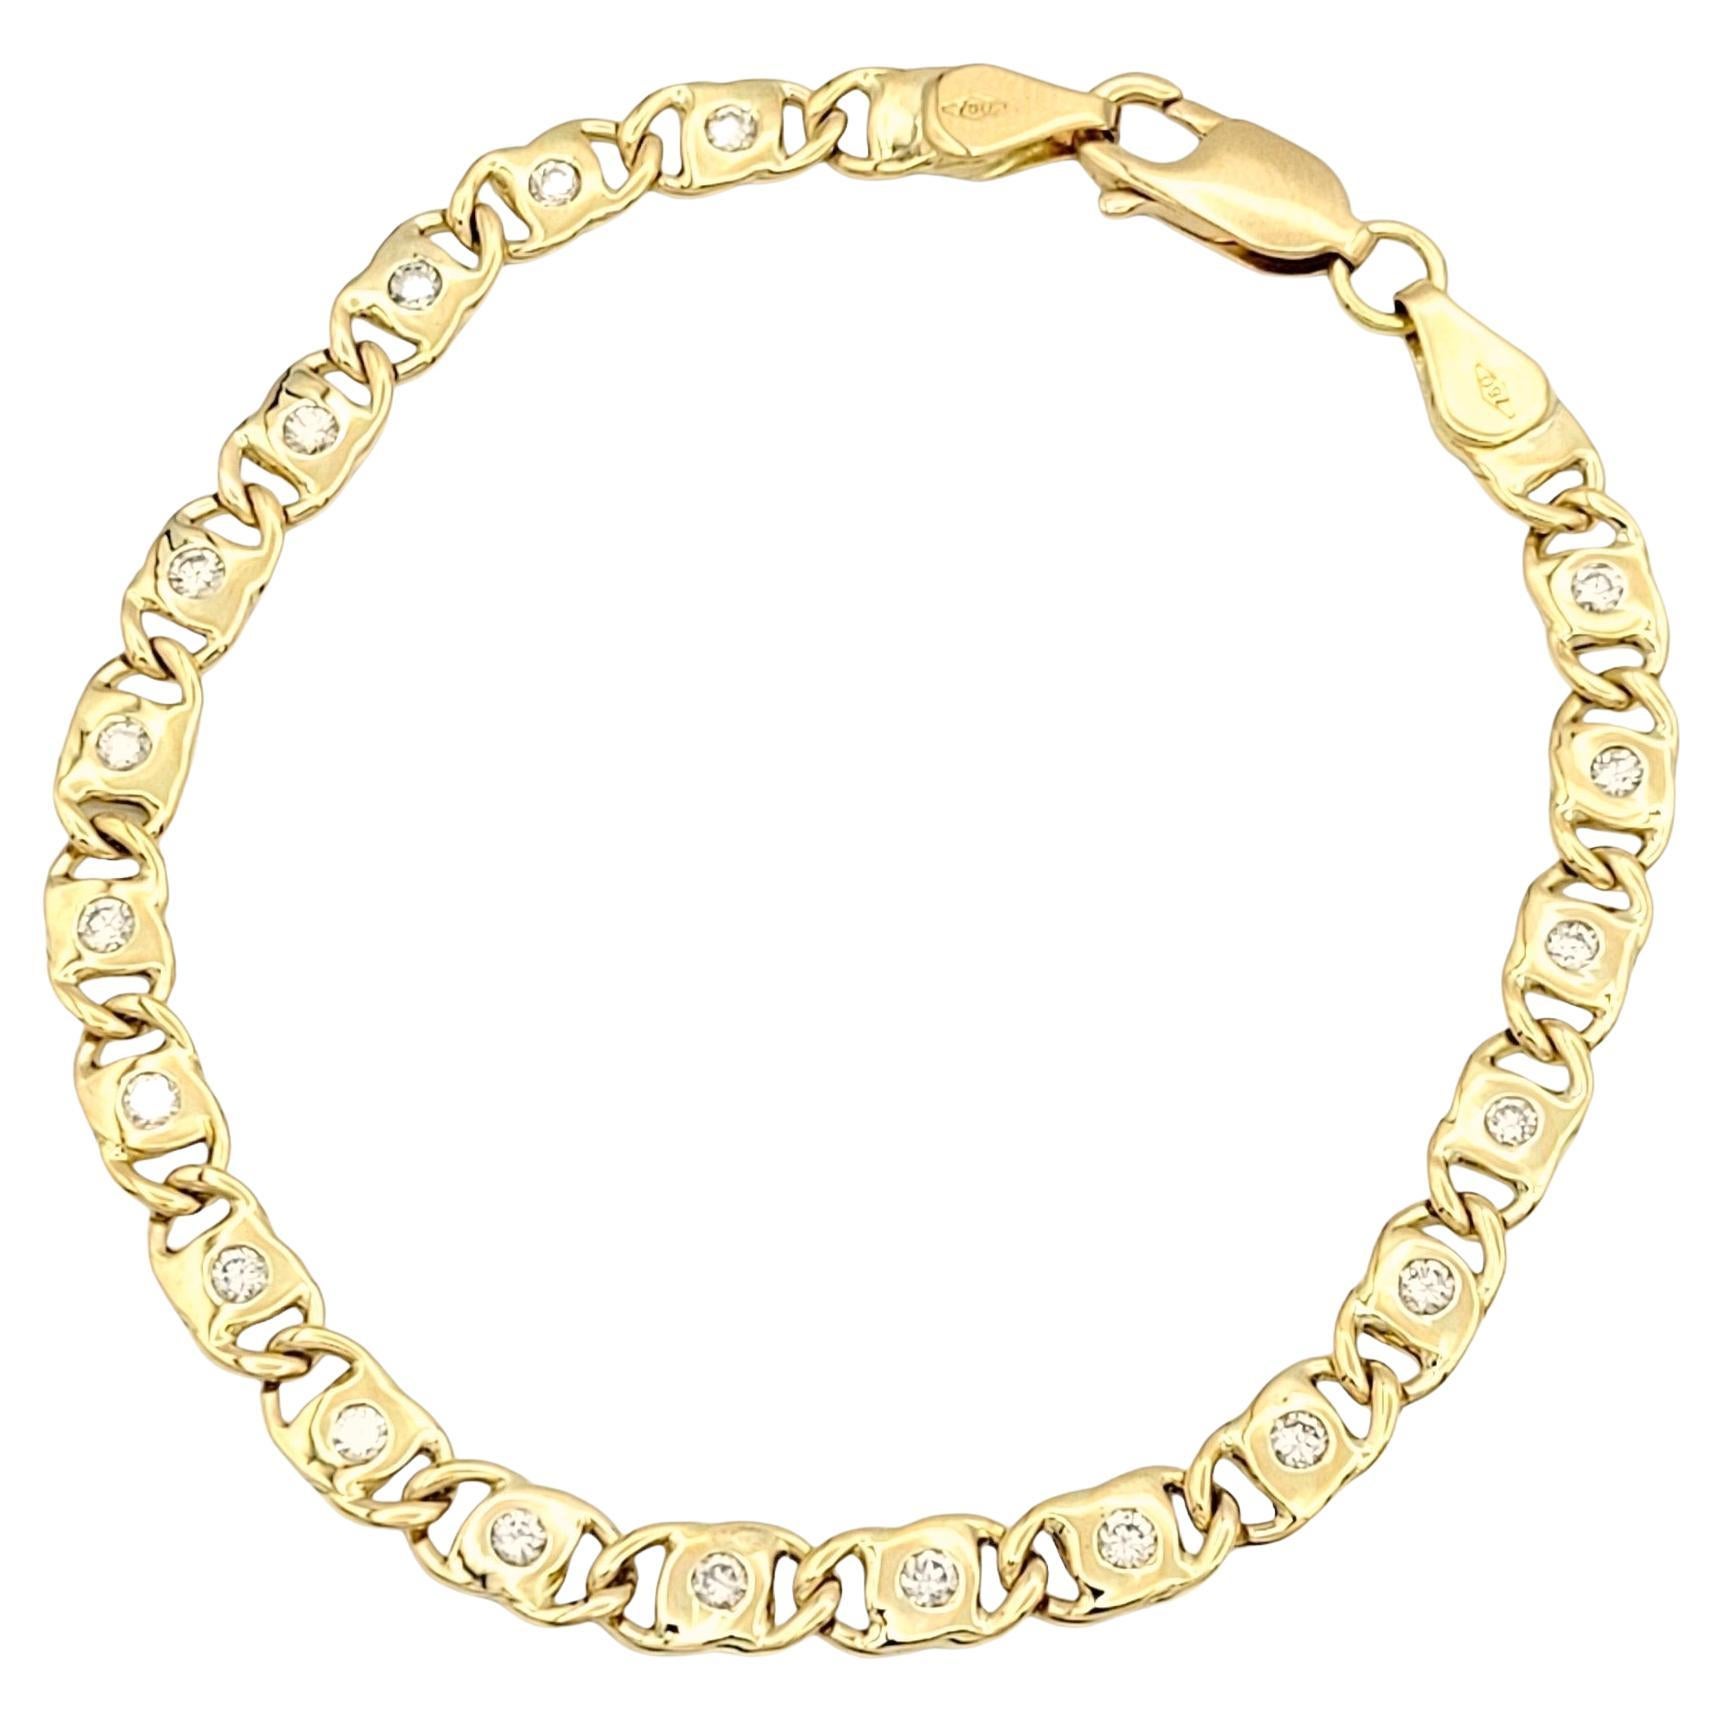 18 Karat Yellow Gold Anchor Link Chain Bracelet with Round Diamonds 